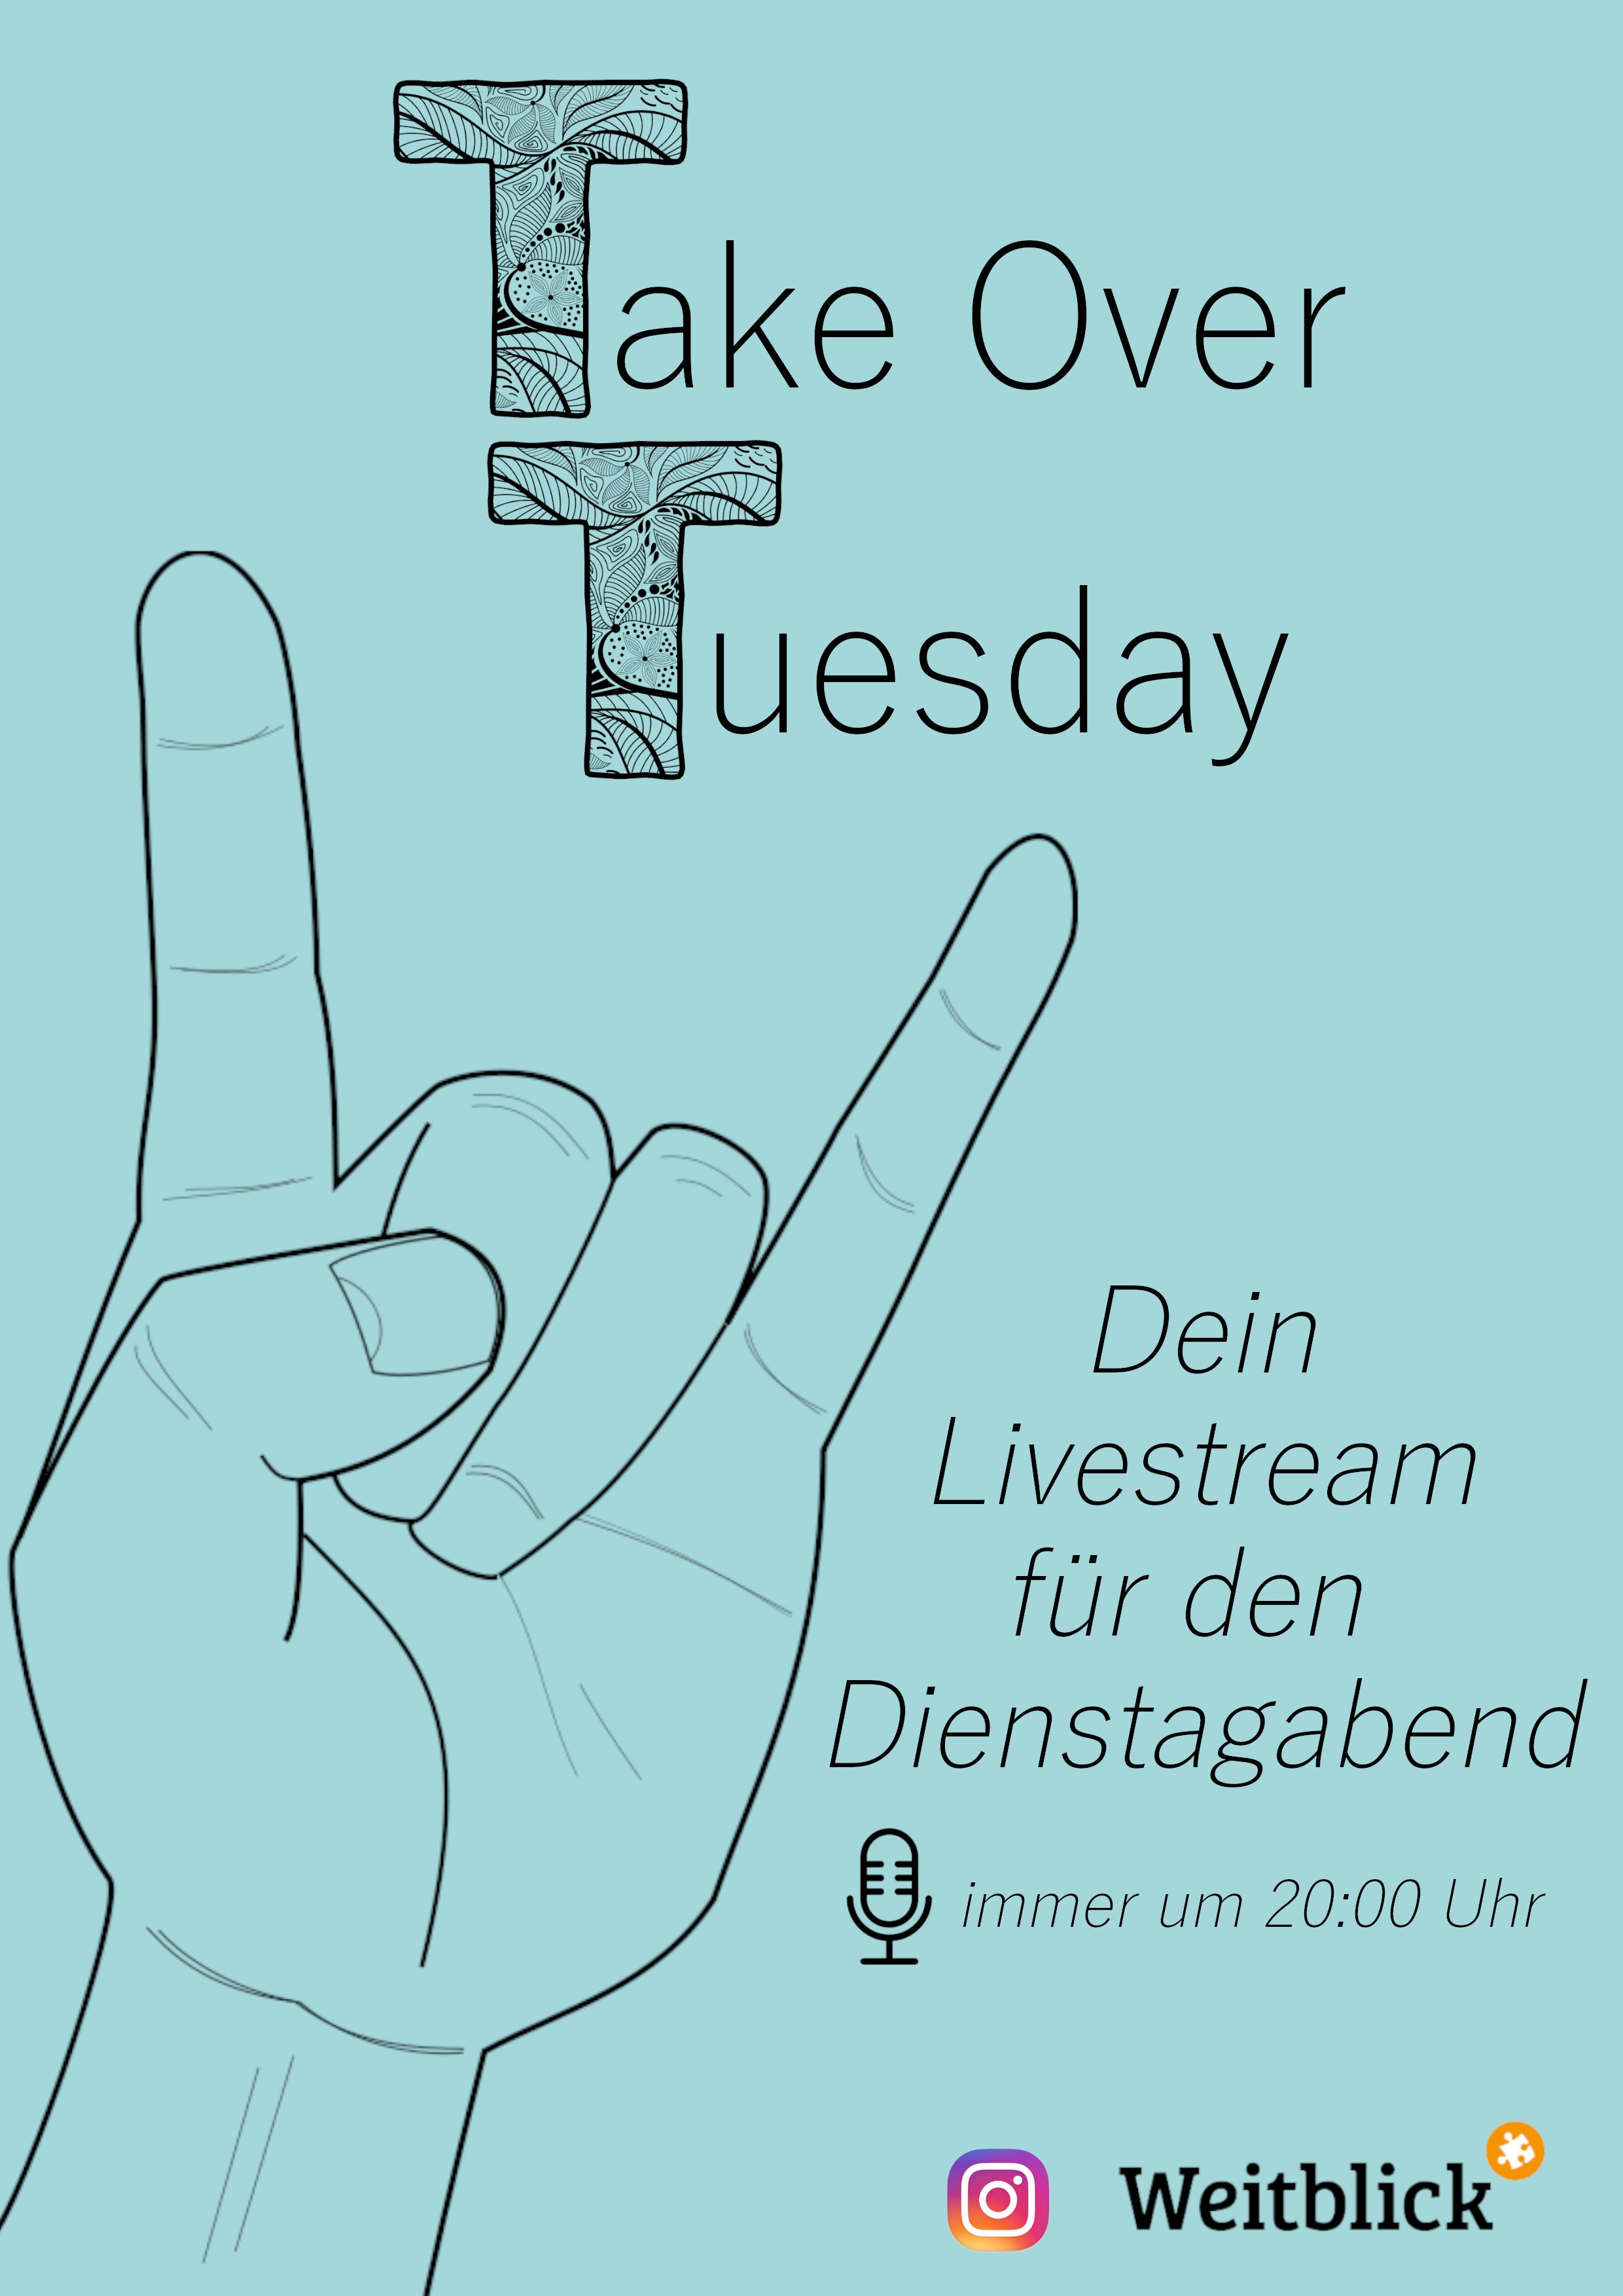 take-over-tuesday-logo.jpeg>